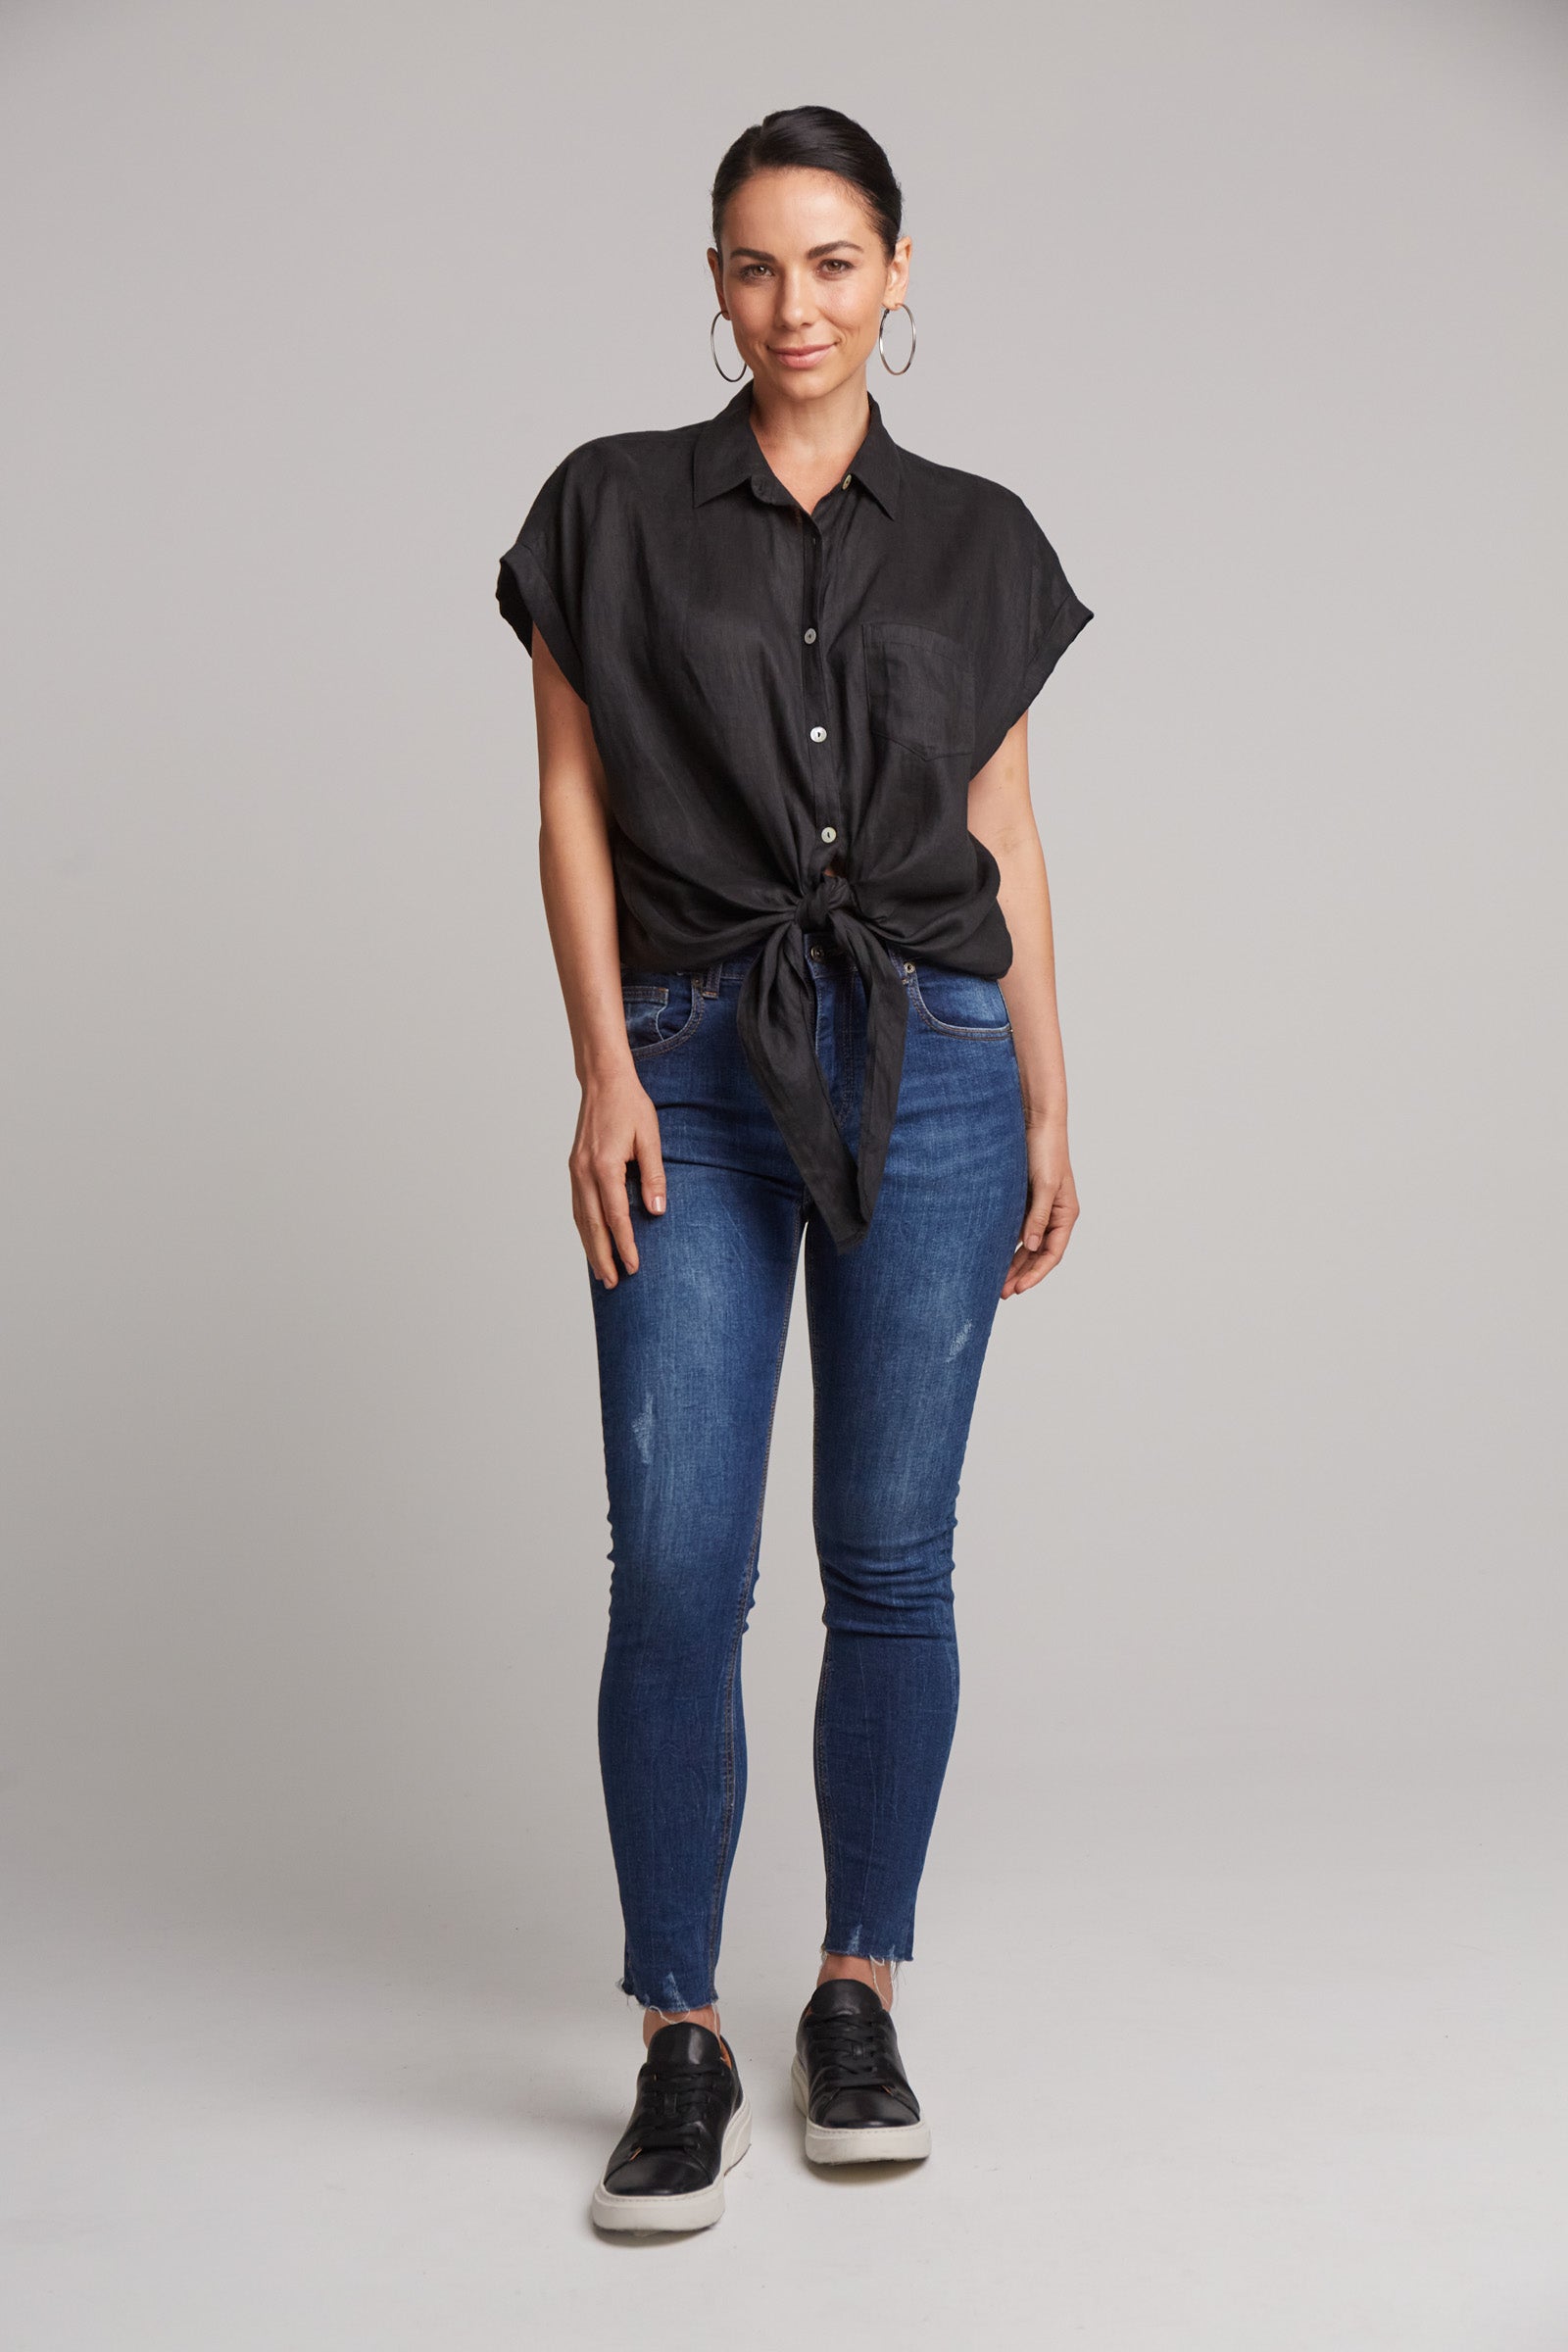 Studio Tie Shirt - Ebony - eb&ive Clothing - Shirt S/S Linen One Size